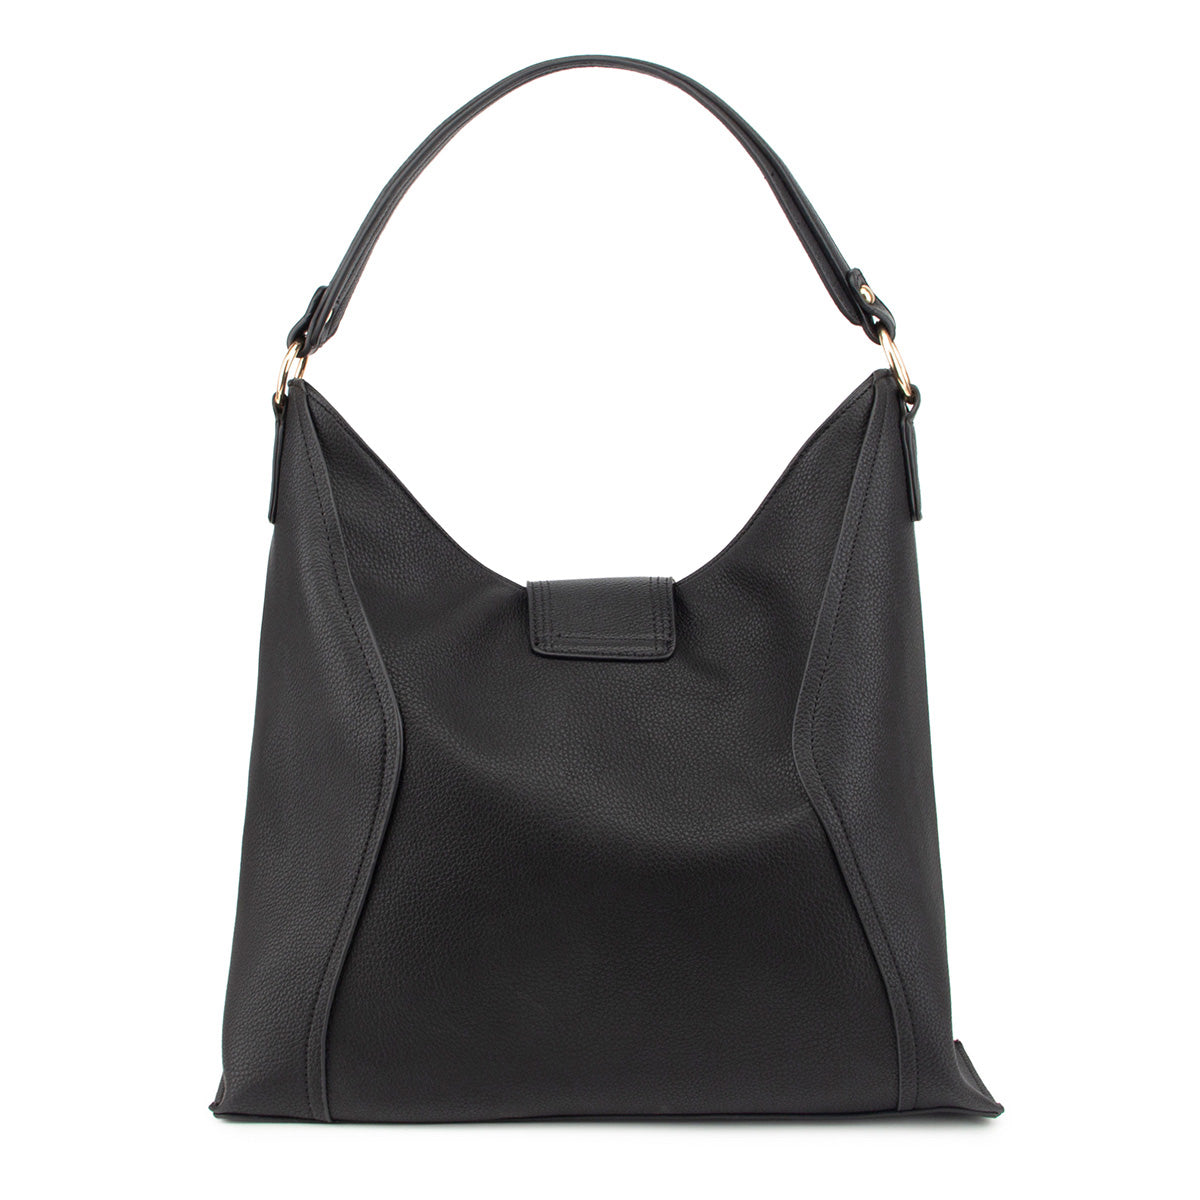 LYDC Medium Shoulder / Tote Handbag with Flap & Zipper Closing